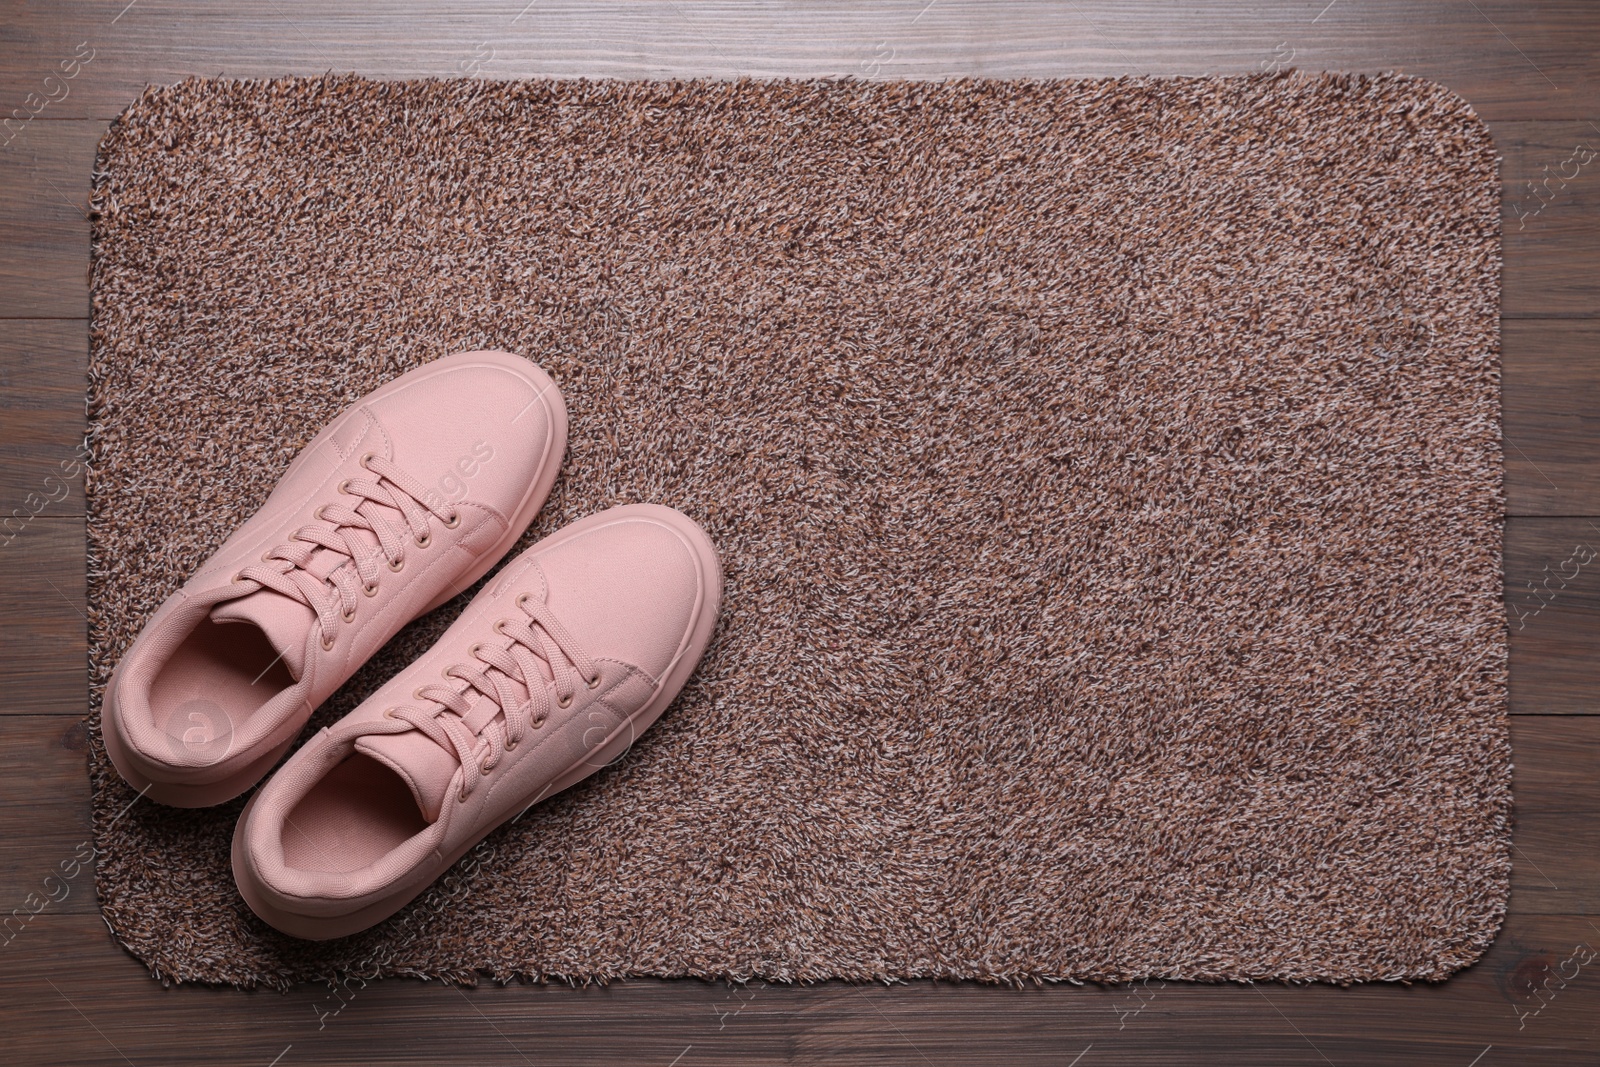 Photo of New clean door mat with shoes on wooden floor, above view